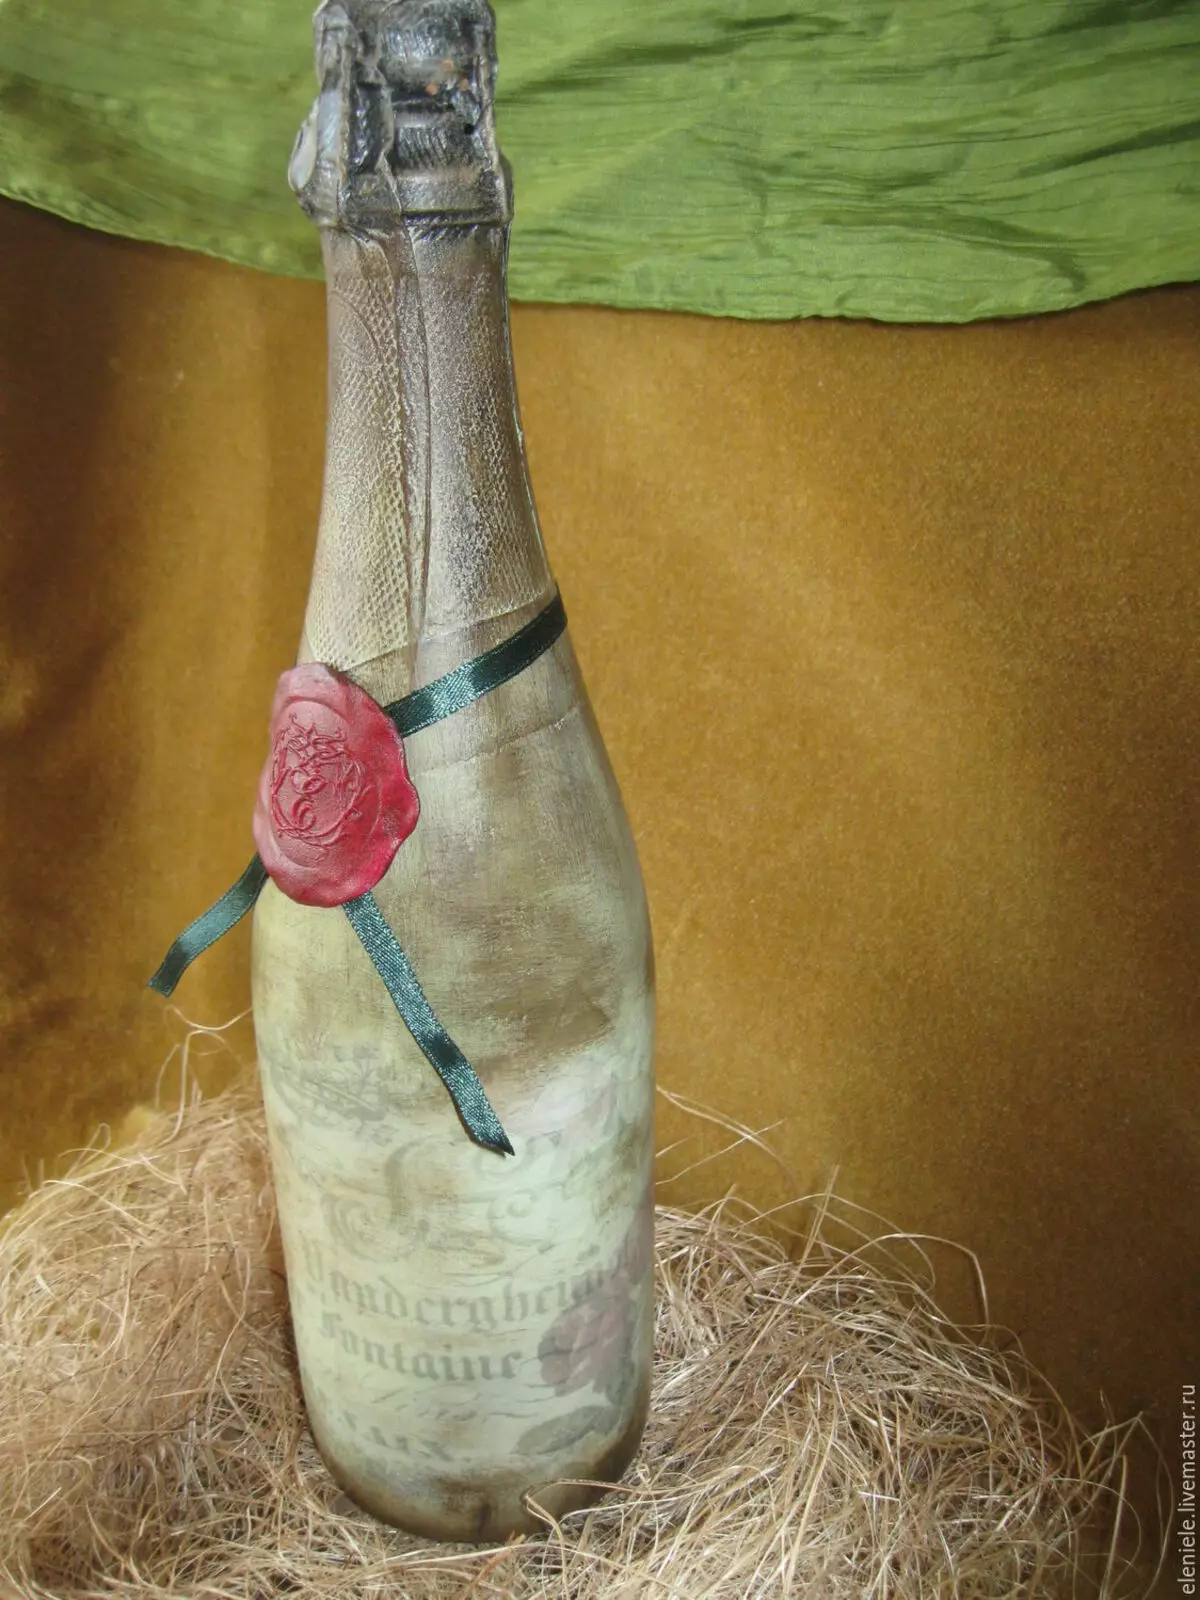 Decoupage of Champagne Bottle (42 Foto): Idea pada 8 Mac dan pada hari lahir wanita, kelas induk di Decoupage dengan tangan mereka sendiri 19090_6